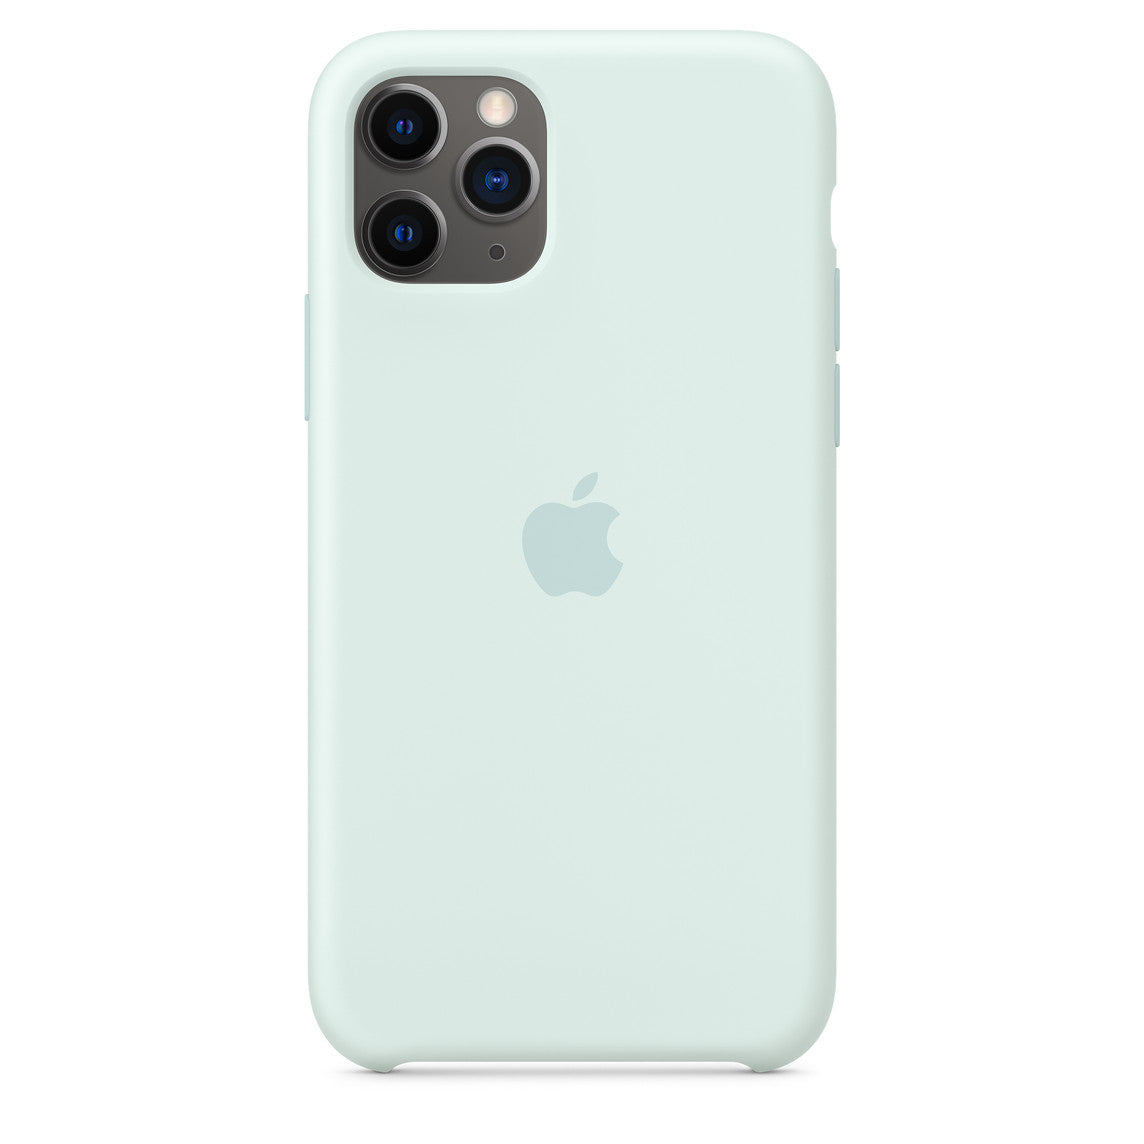 Apple iPhone 11 Pro Silicone Case - Seafoam Seafoam New - Sealed